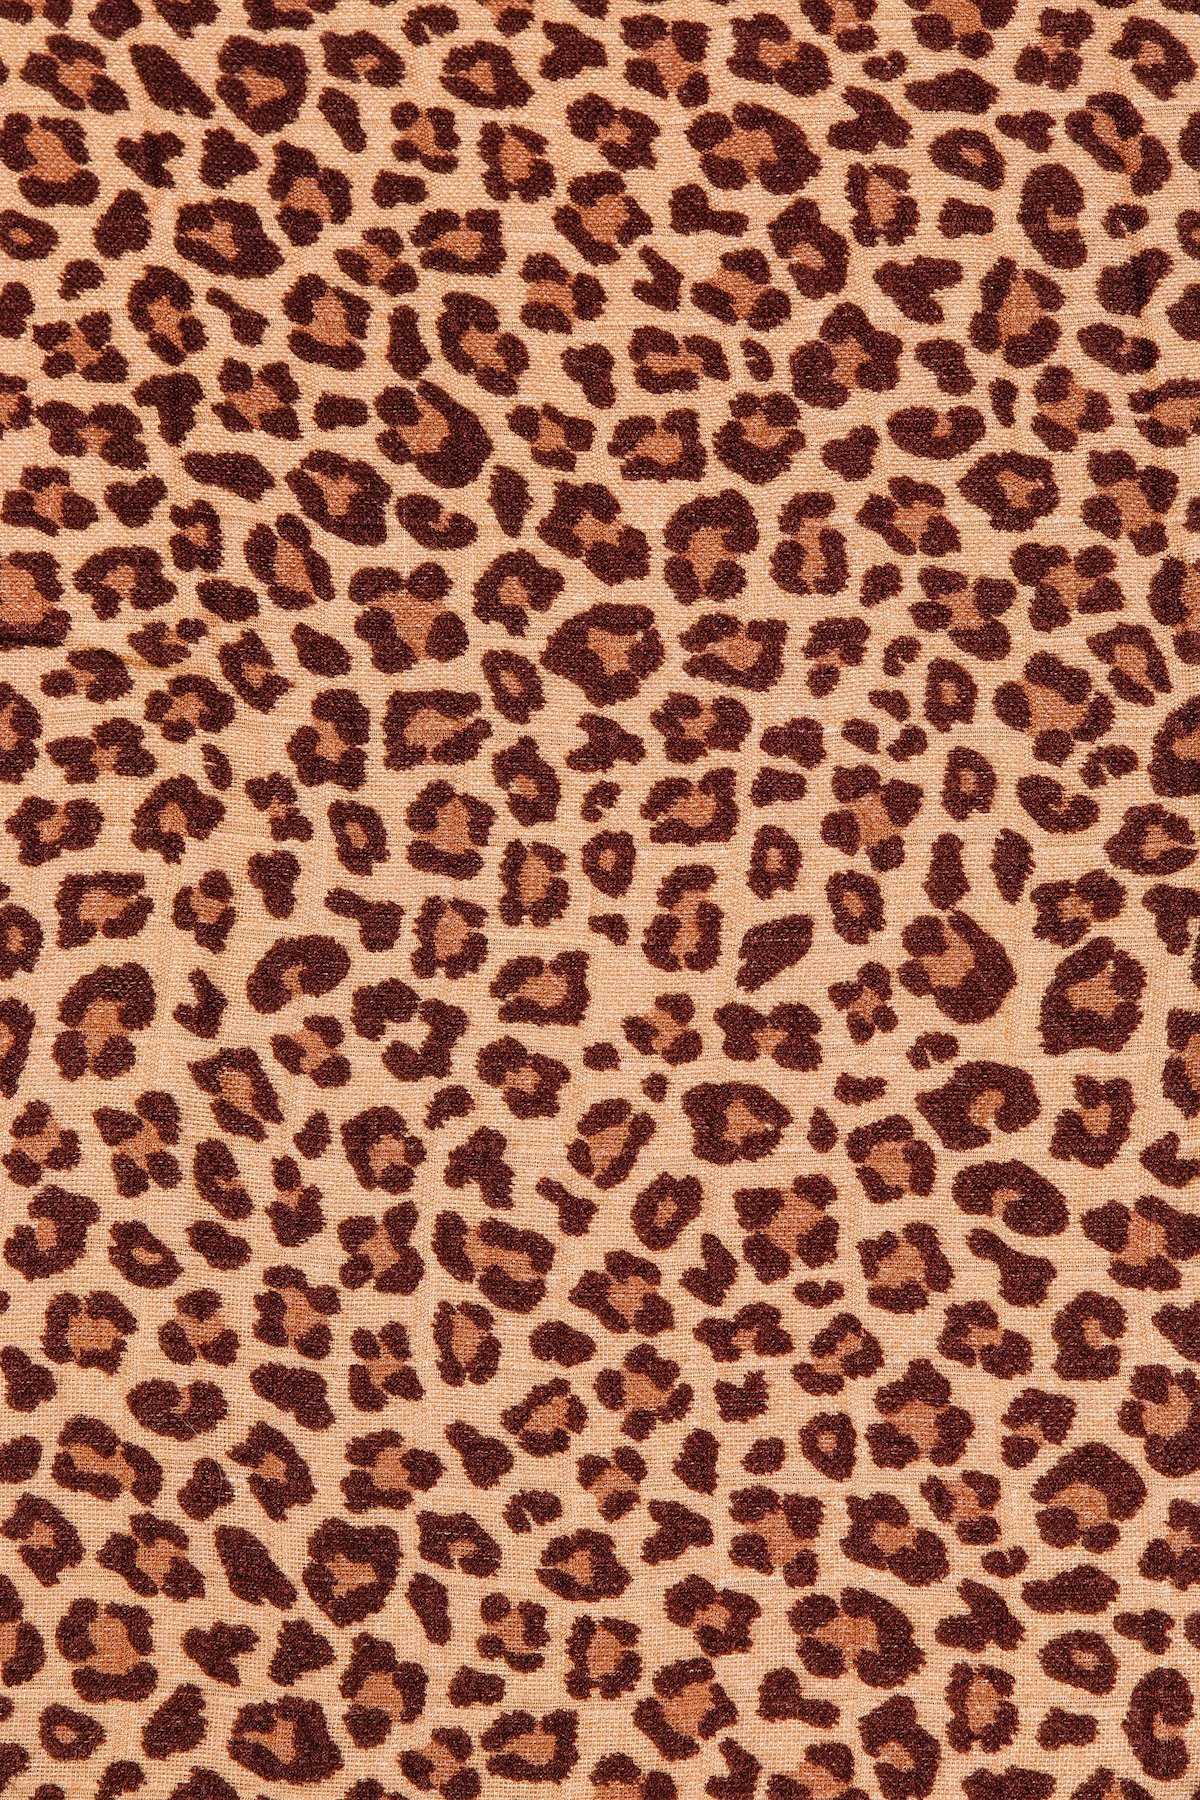 Cheetah Print iPhone Wallpapers Group 43  ClipArt Best  ClipArt Best